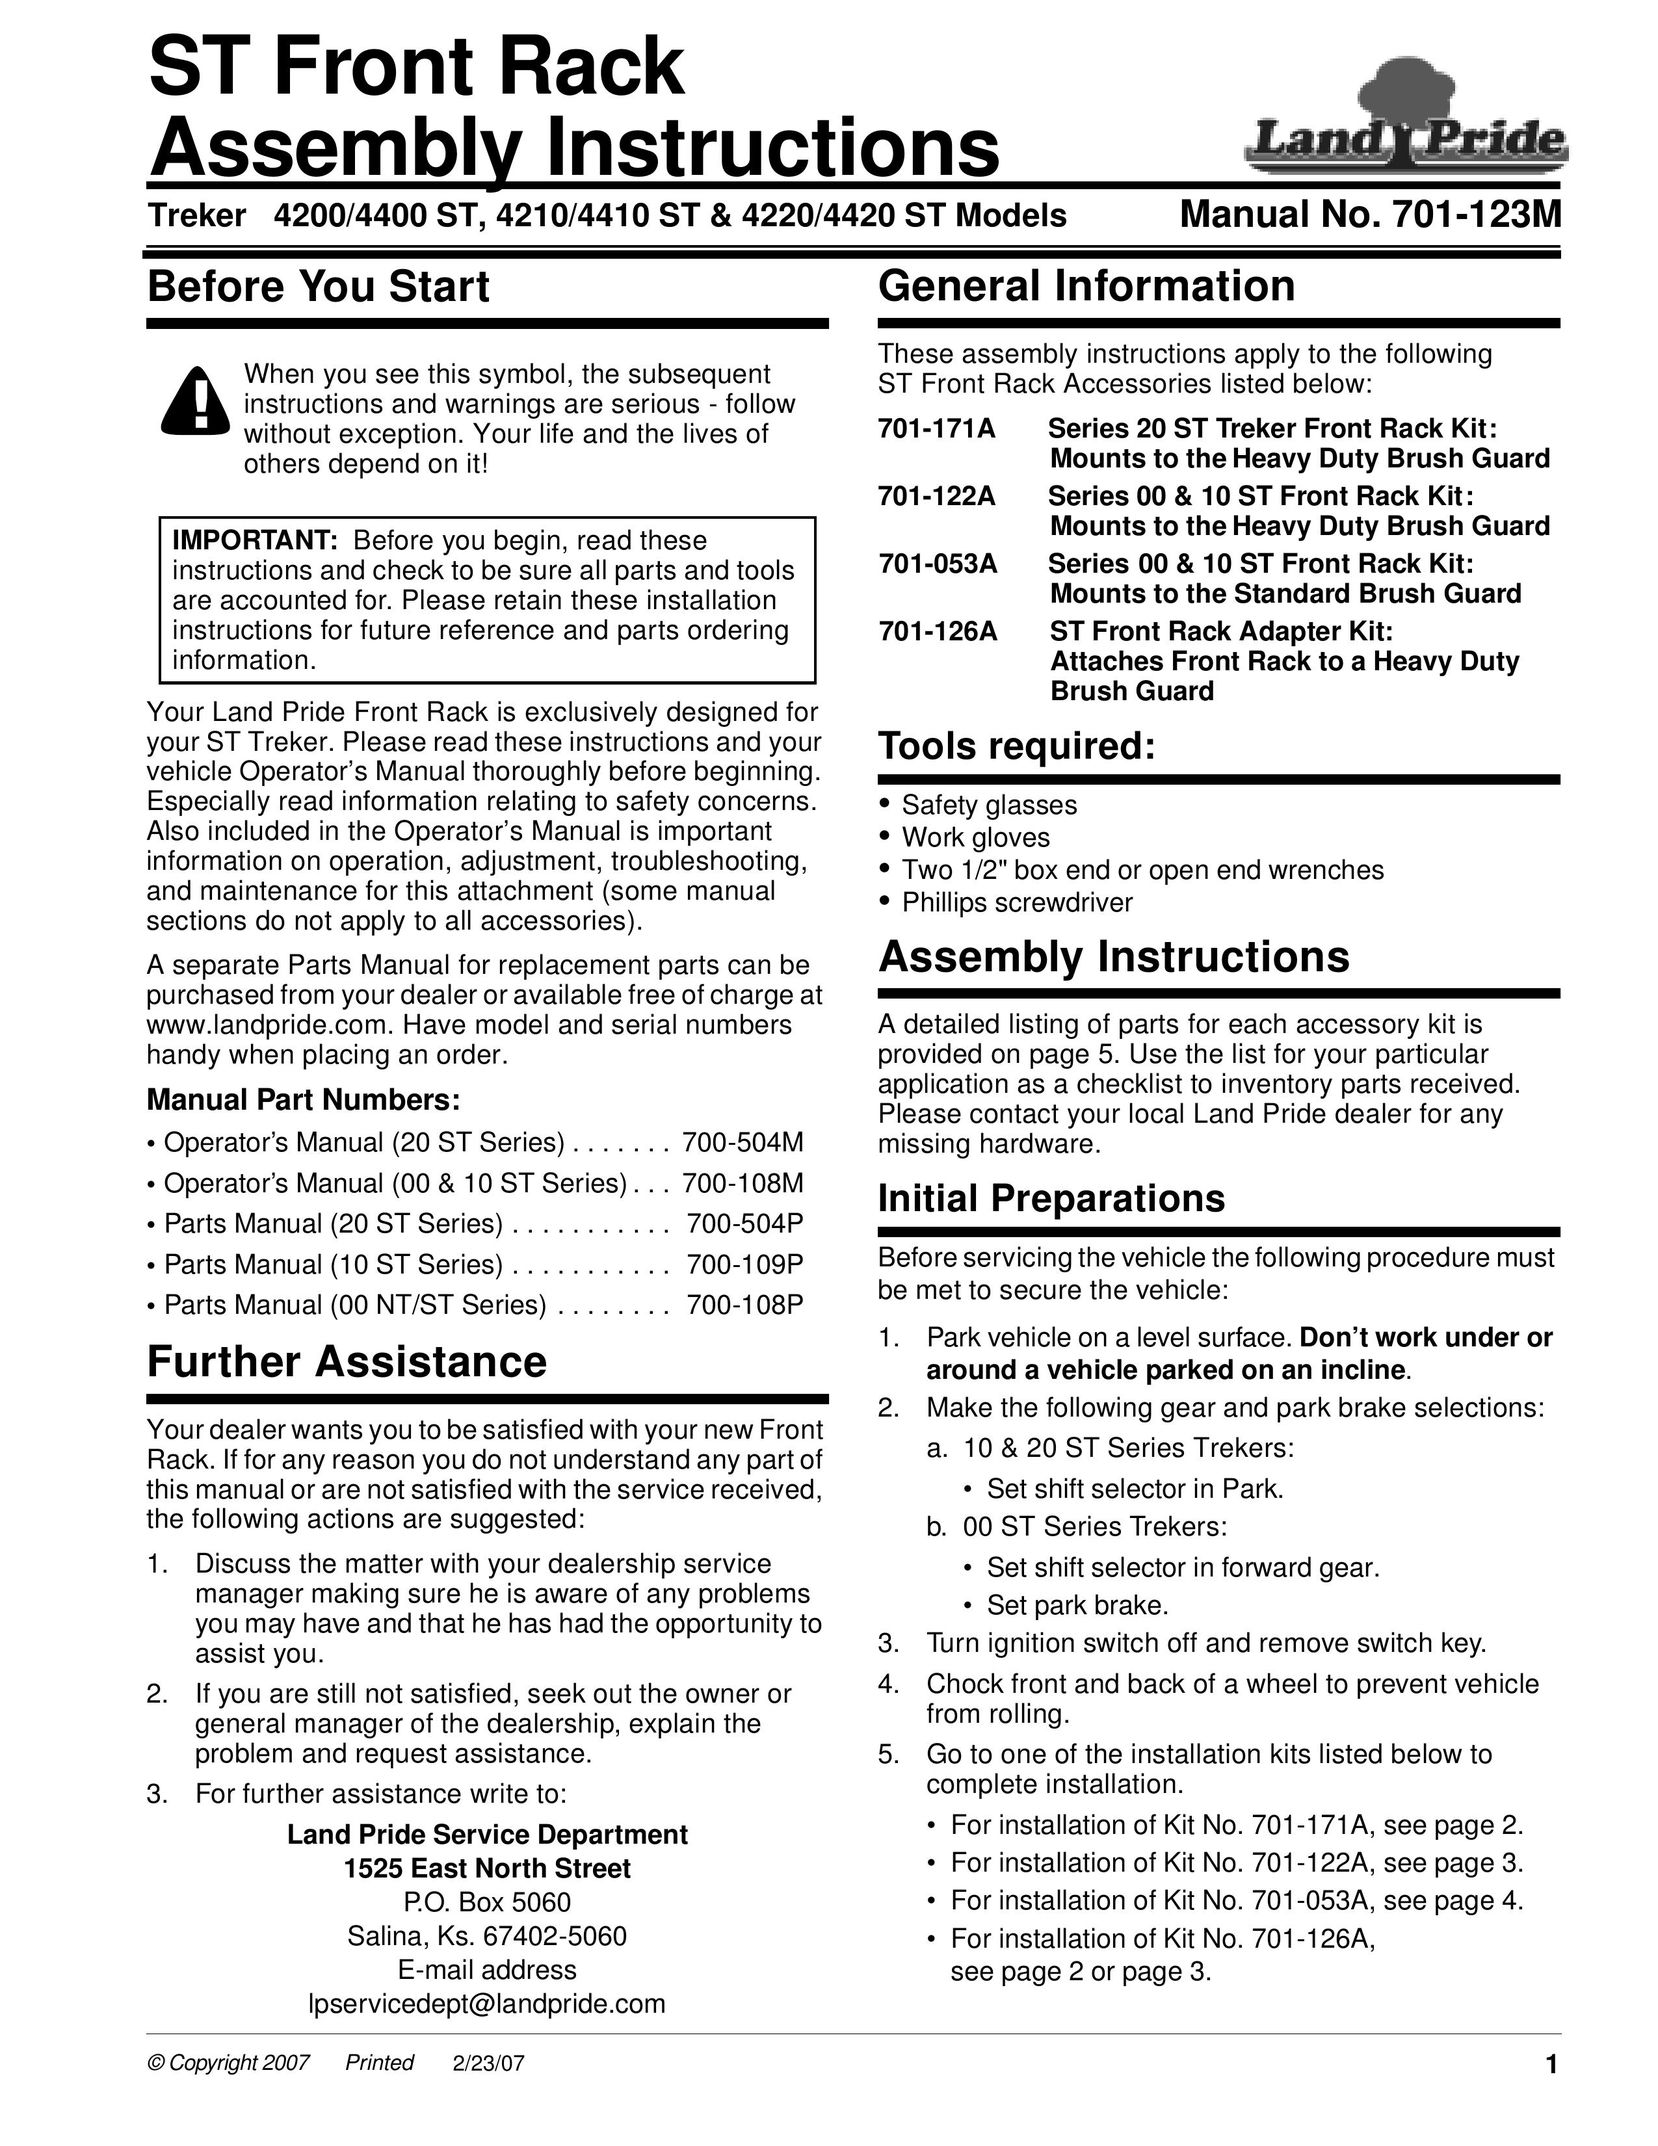 Land Pride 701-053a Child Tracker User Manual